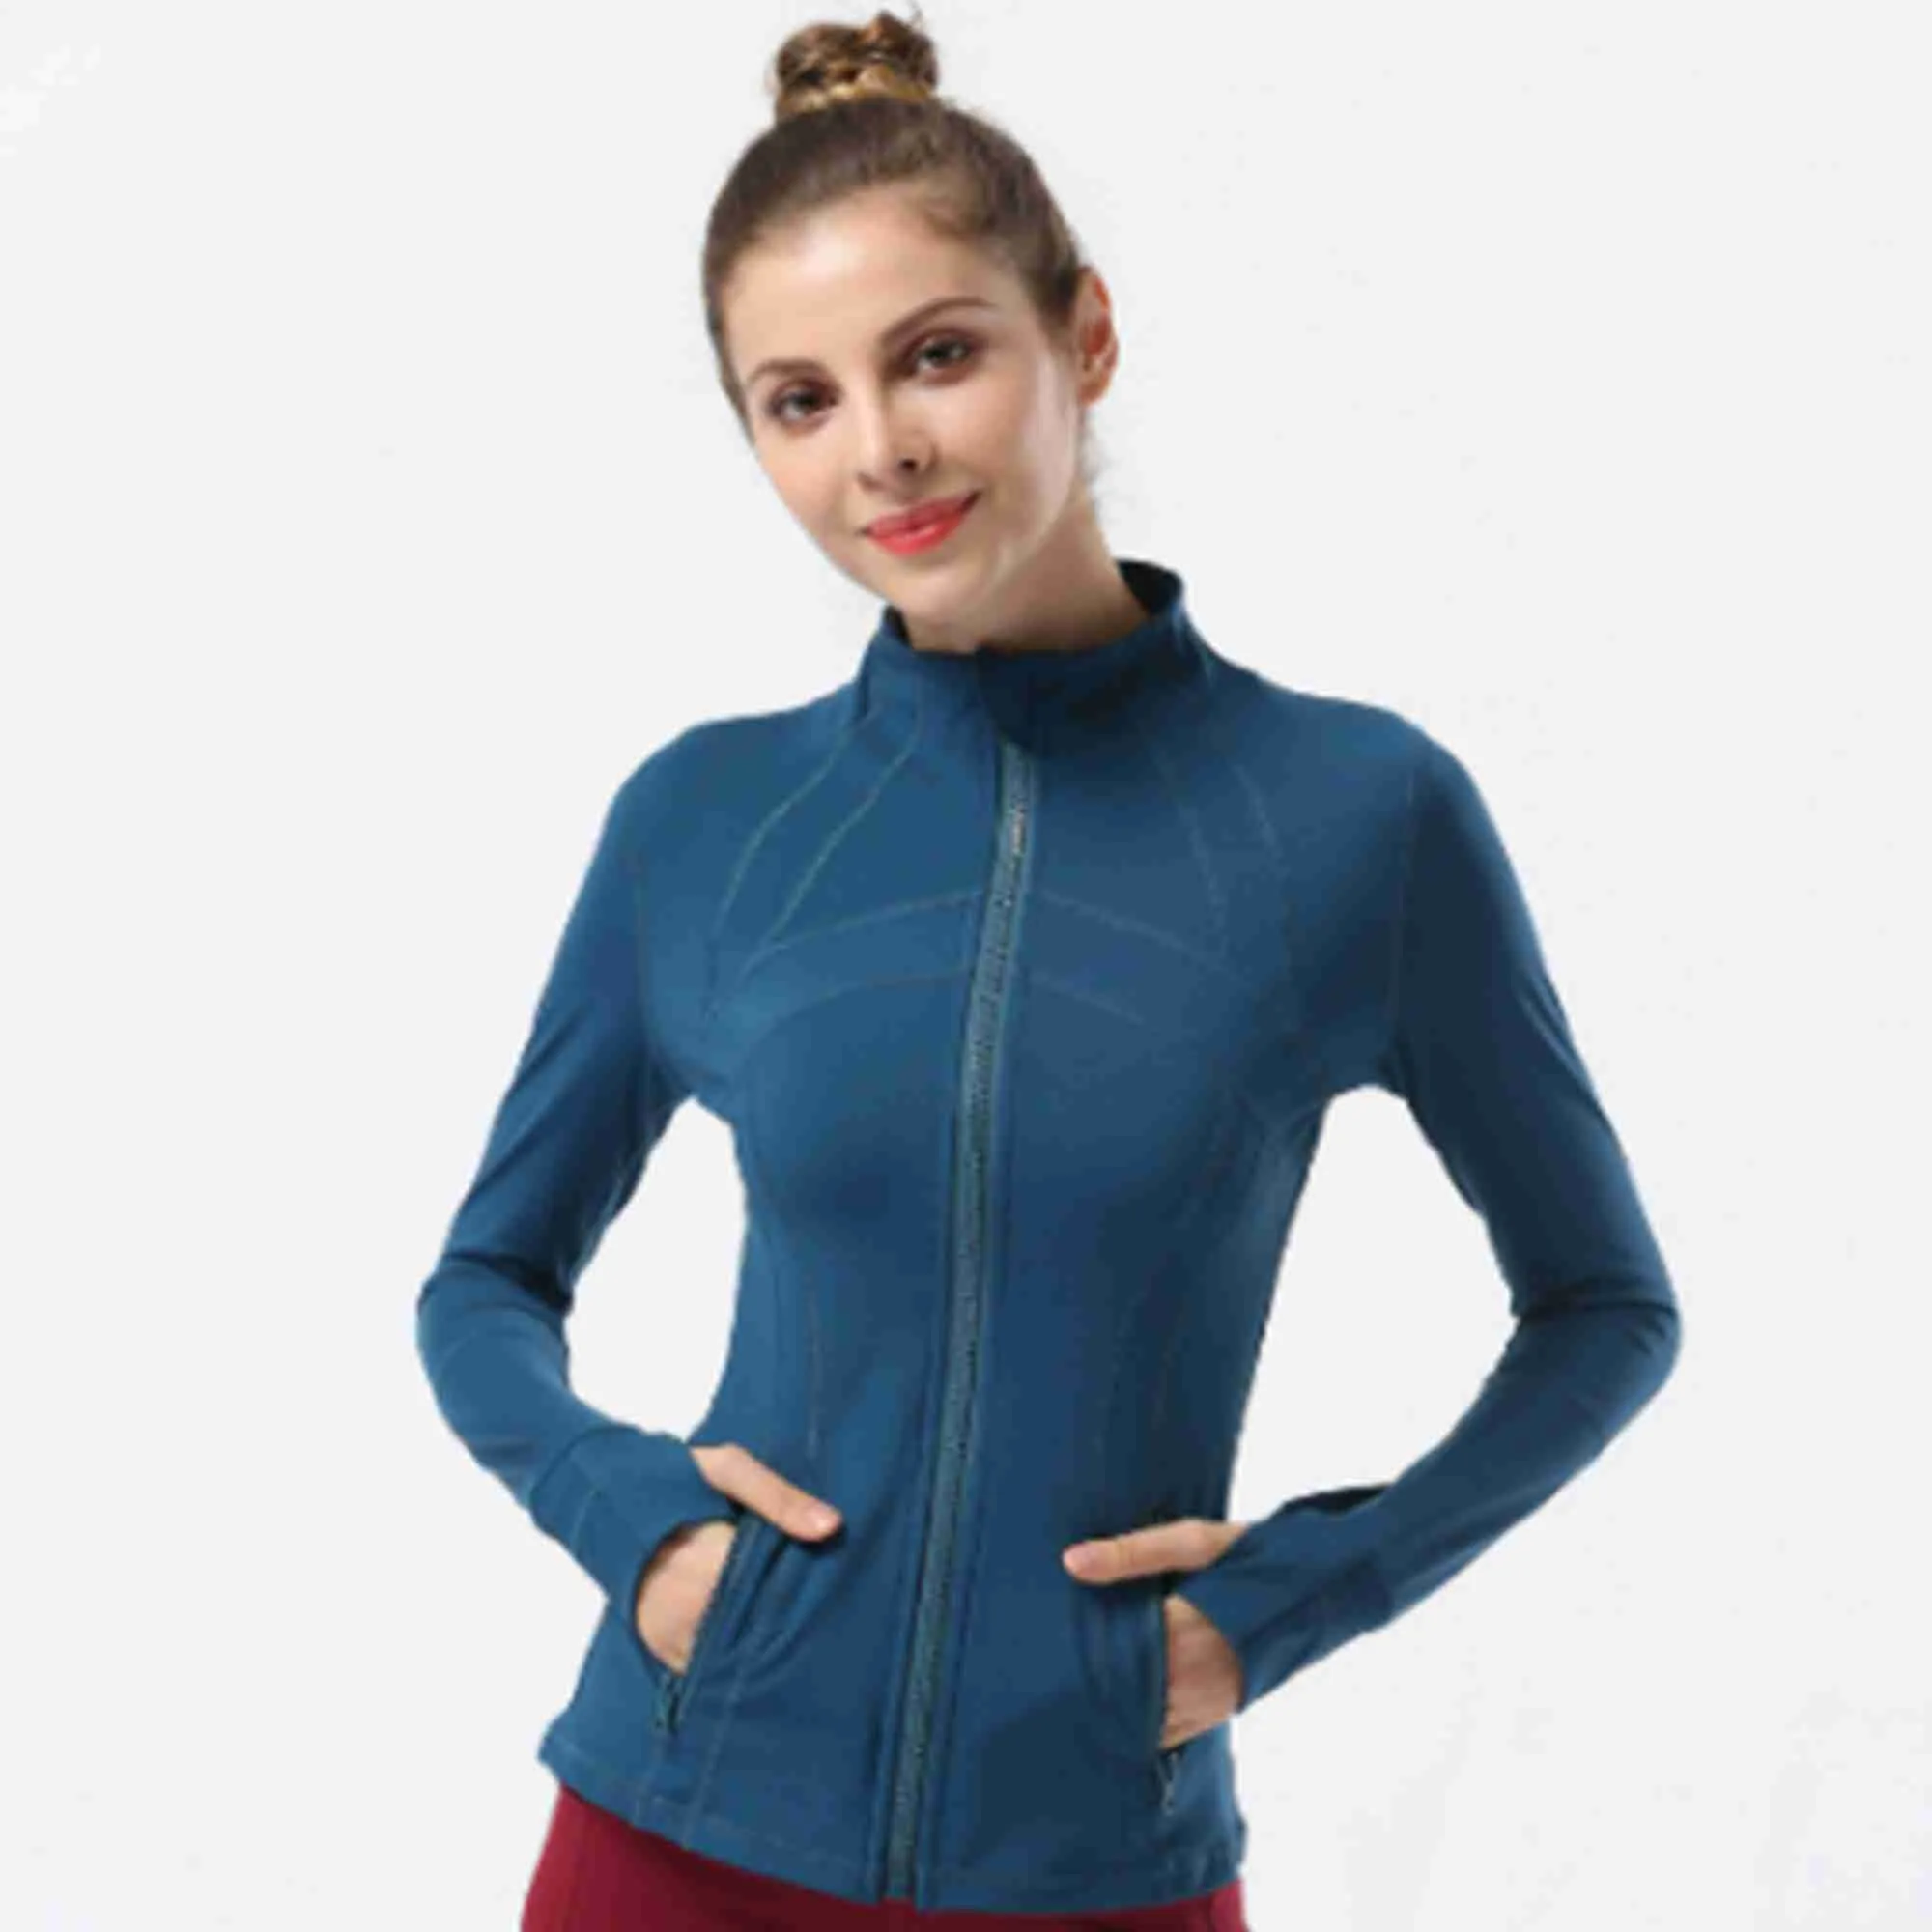 LU-99 재킷 여성 벌거 벗은 요가 코트 긴 소매 작물 탑 지퍼 피트니스 러닝 셔츠 운동 옷 스포츠웨어